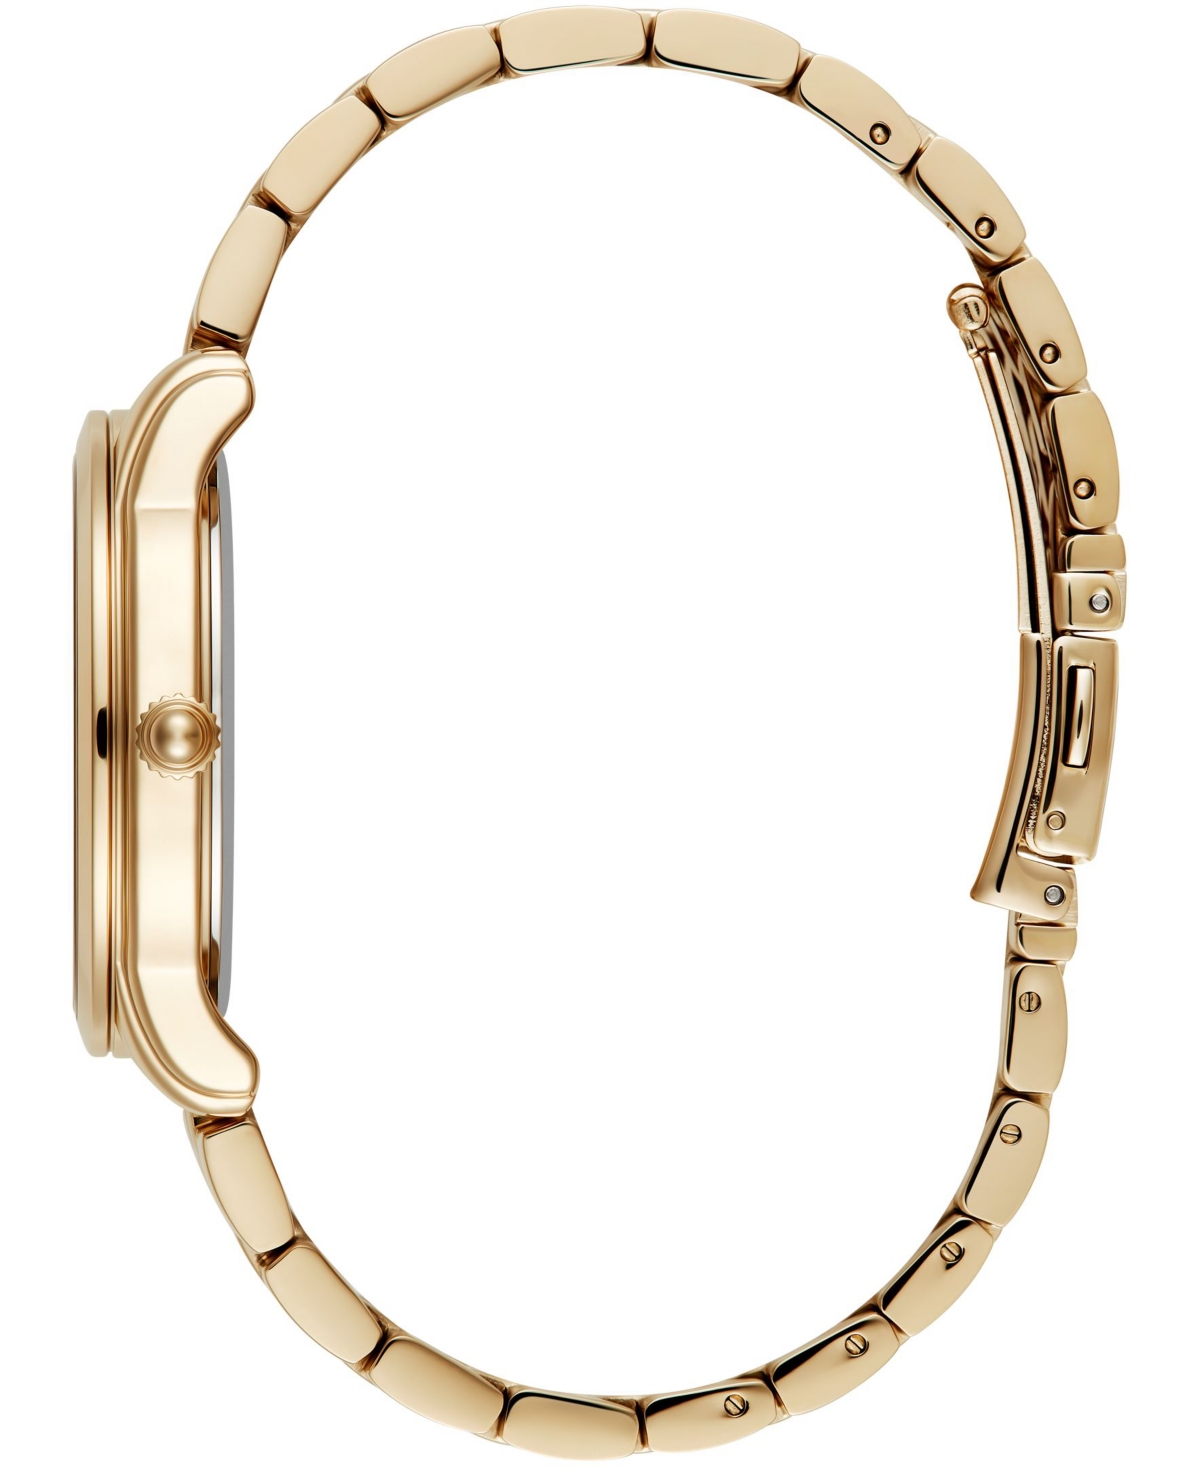 Shop Olivia Burton Women's Starlight Gold-tone Stainless Steel Watch 36mm In Orange